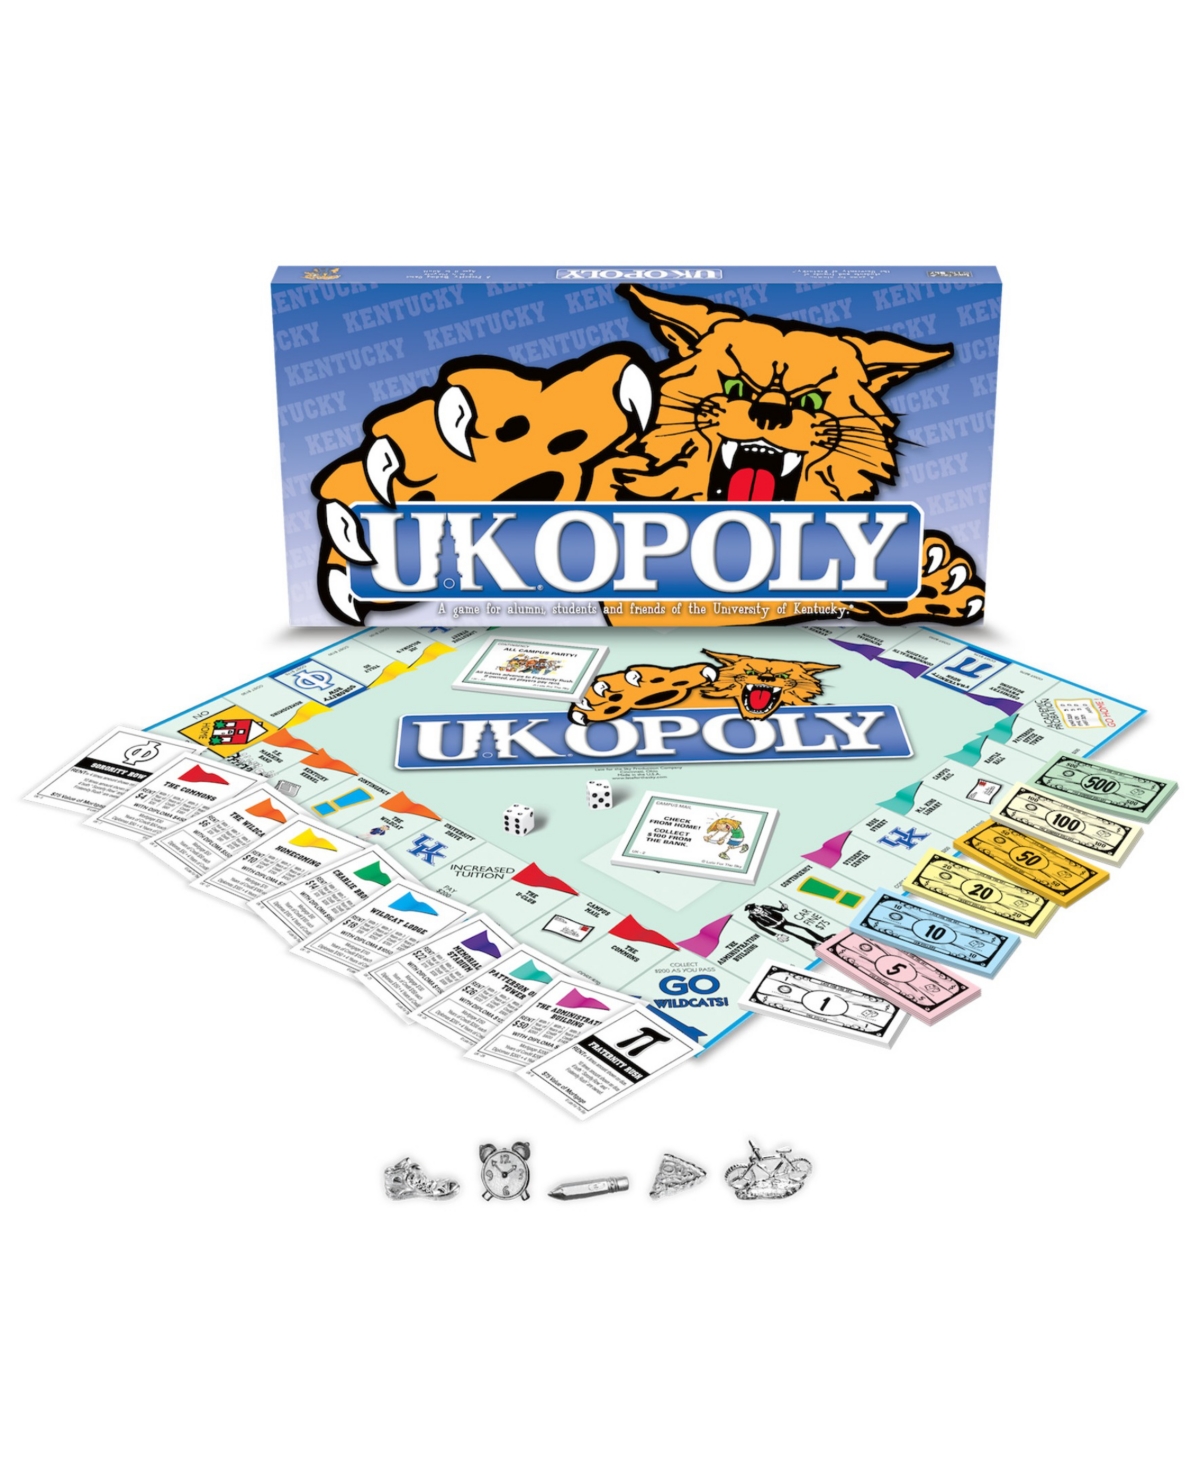 Redbox Uk-opoly Board Game In Multi